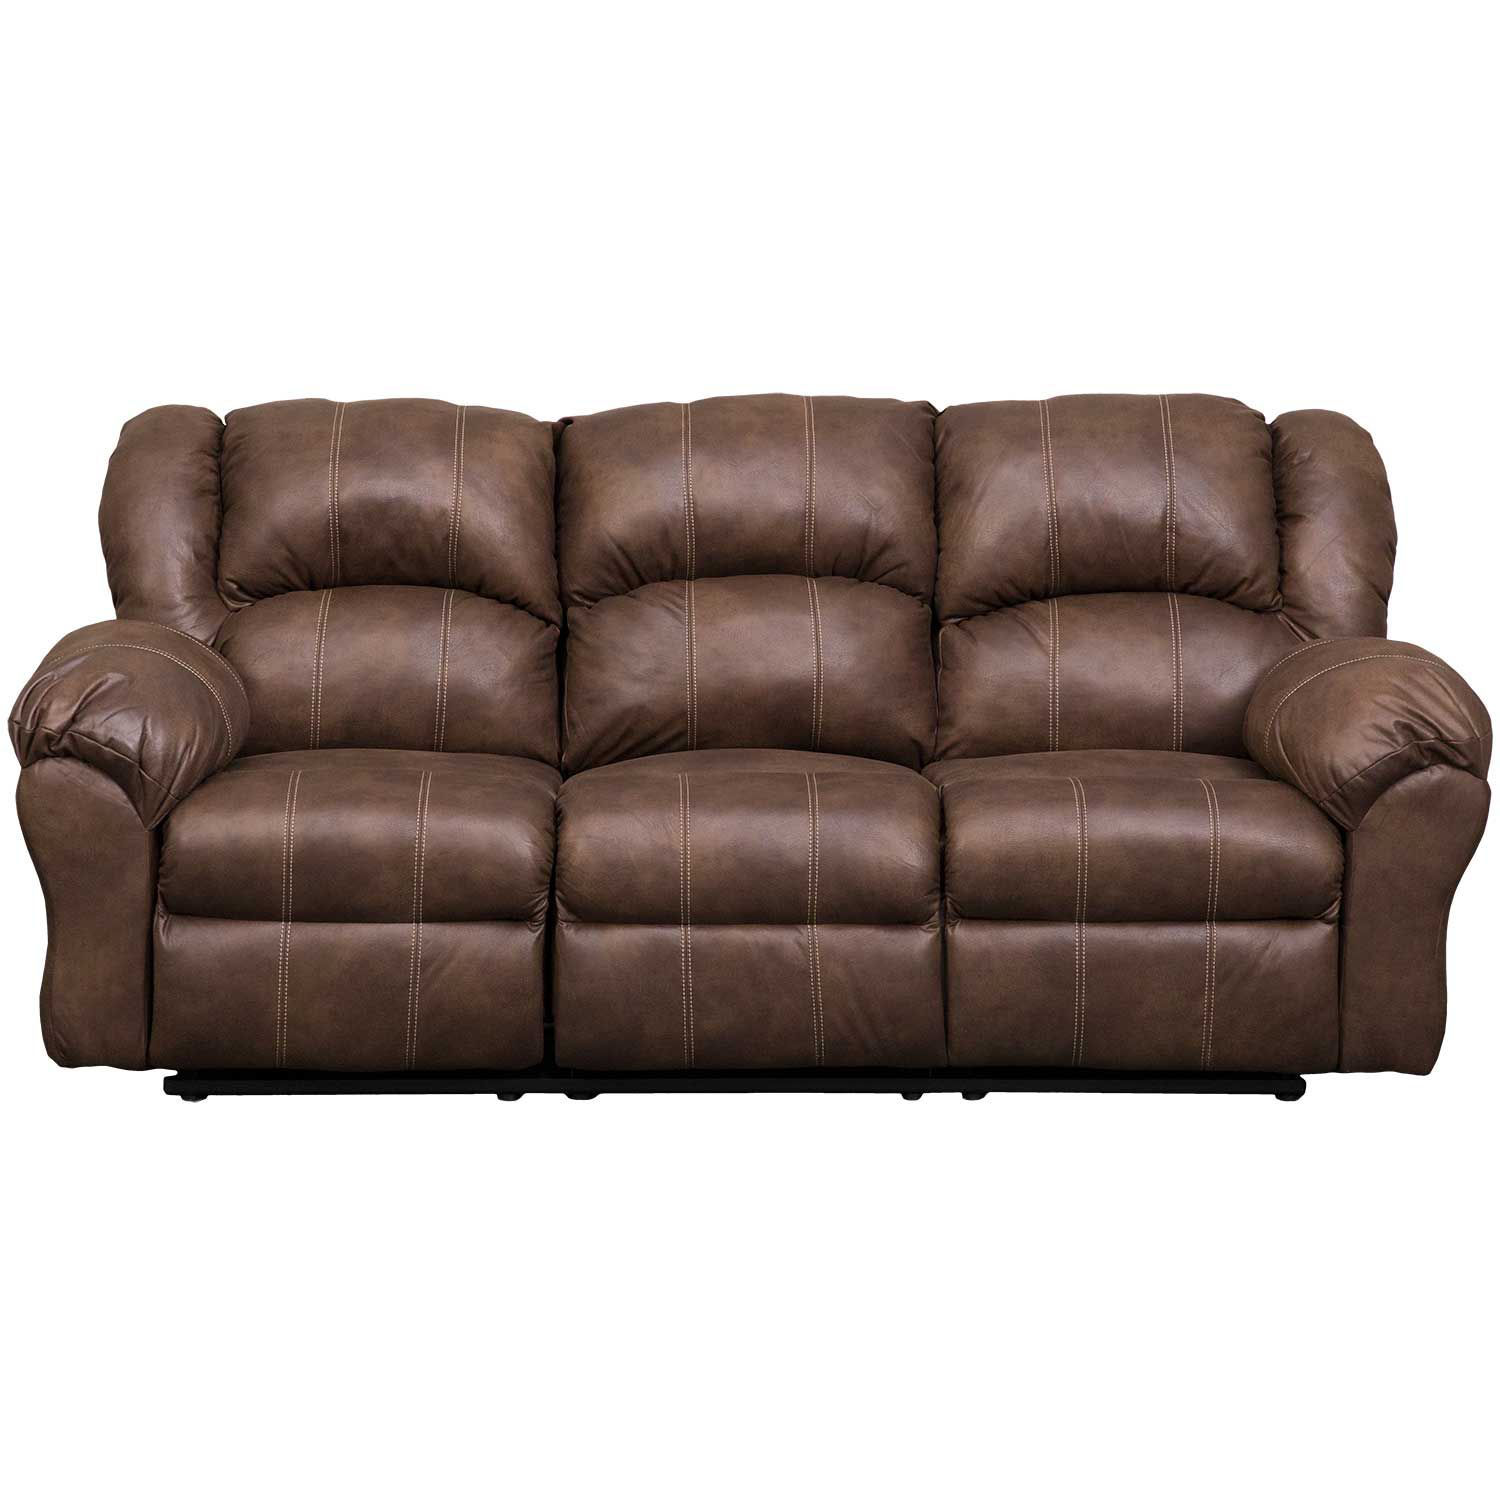 Damacio Leather Reclining Sofa 0s0